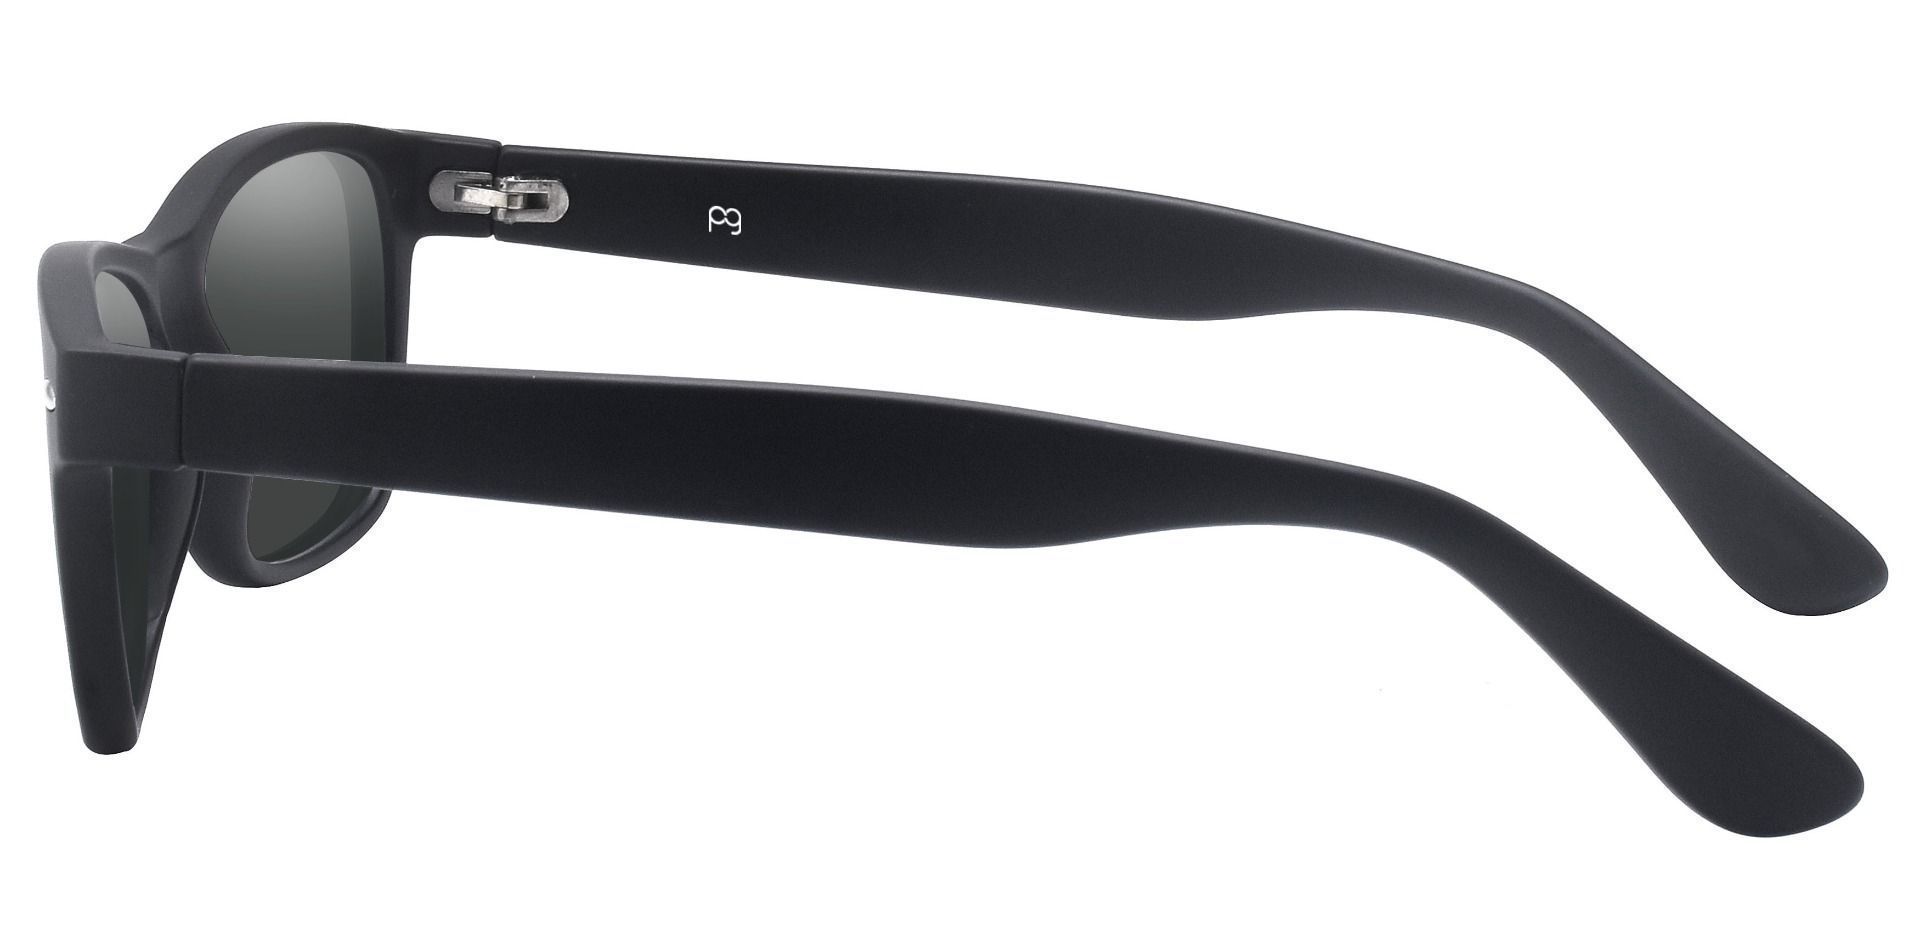 Kent Rectangle Non-Rx Sunglasses - Black Frame With Gray Lenses